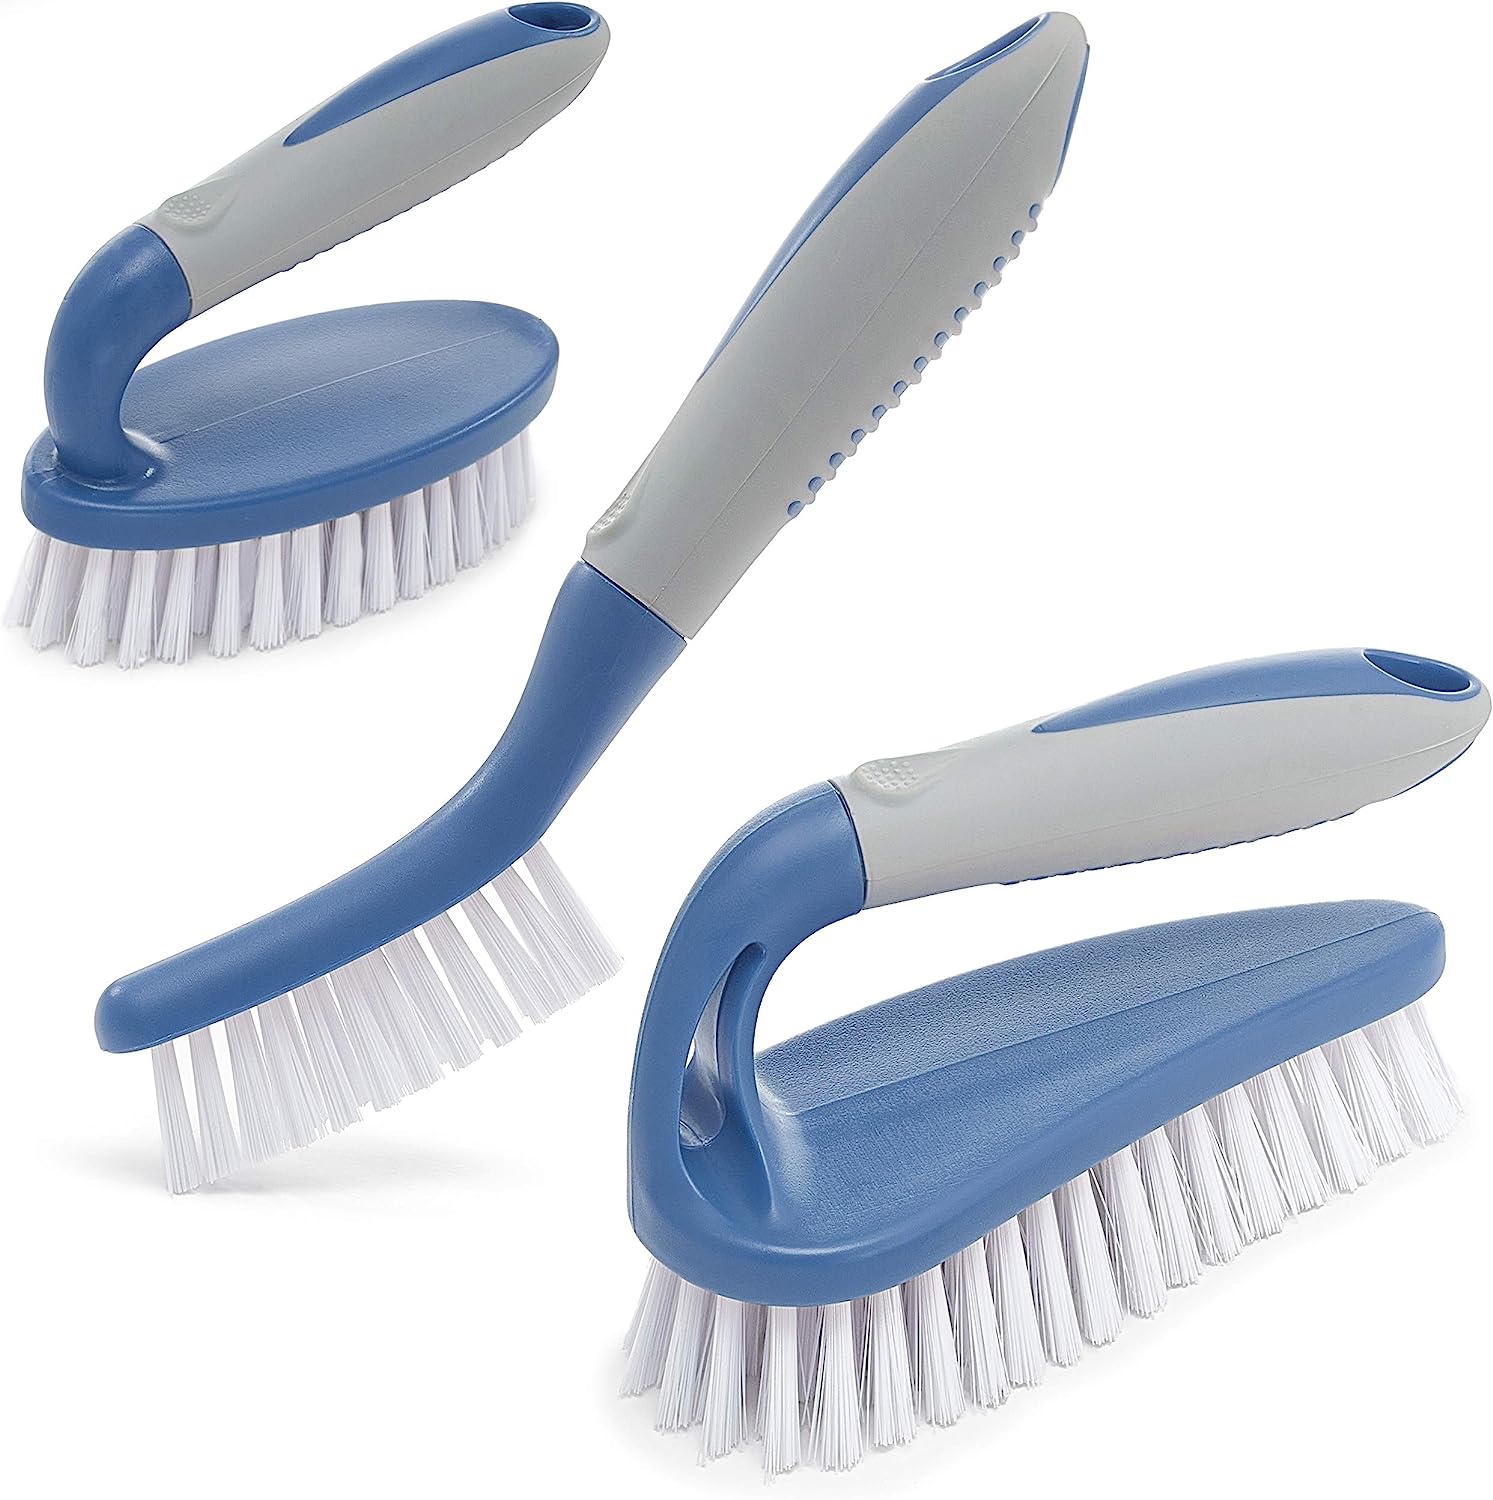 Scrub Brush Set of 3pcs - Cleaning Shower Scrubber [...]